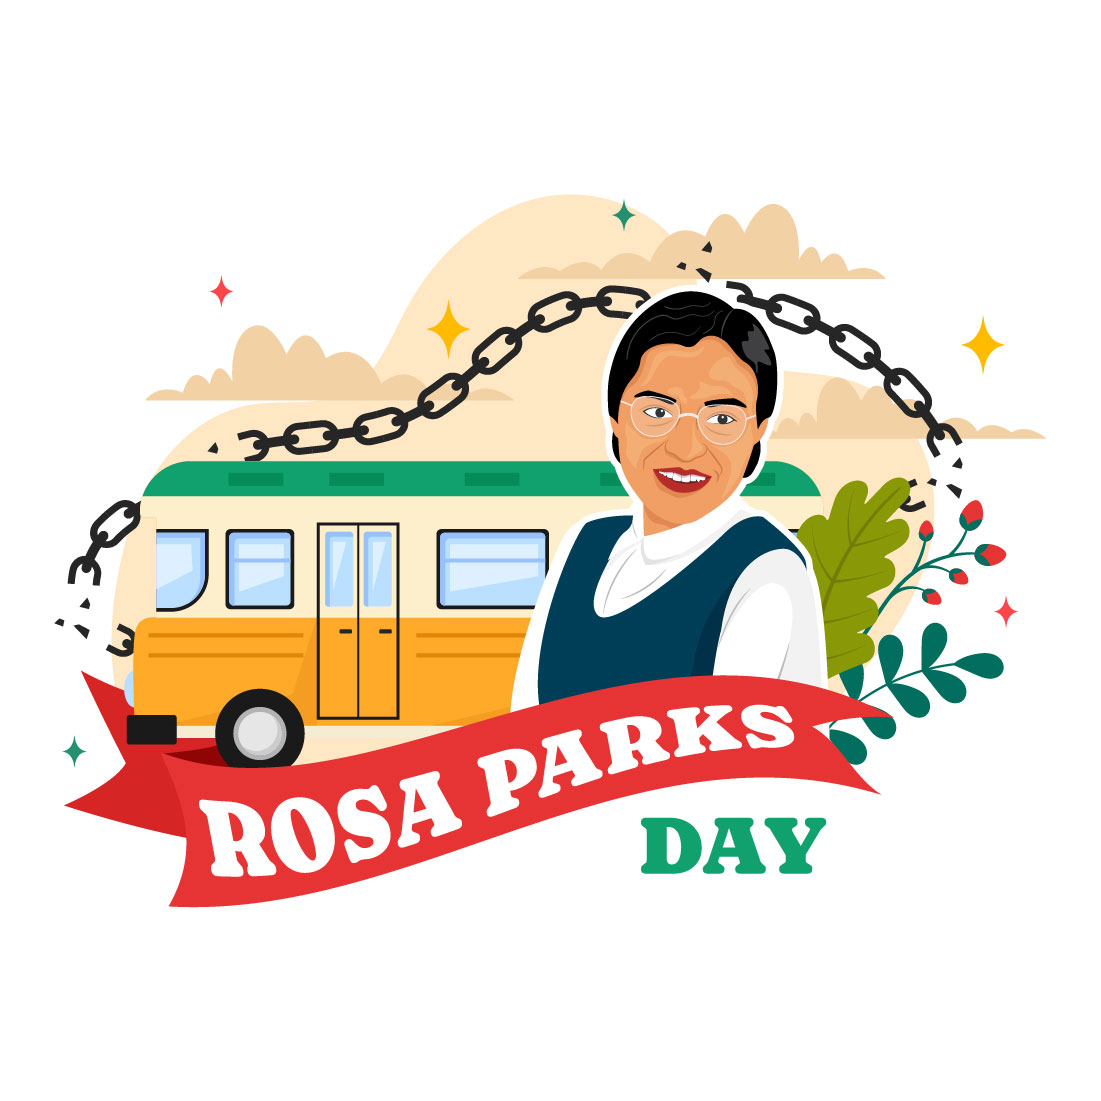 9 Rosa Parks Day Illustration cover image.